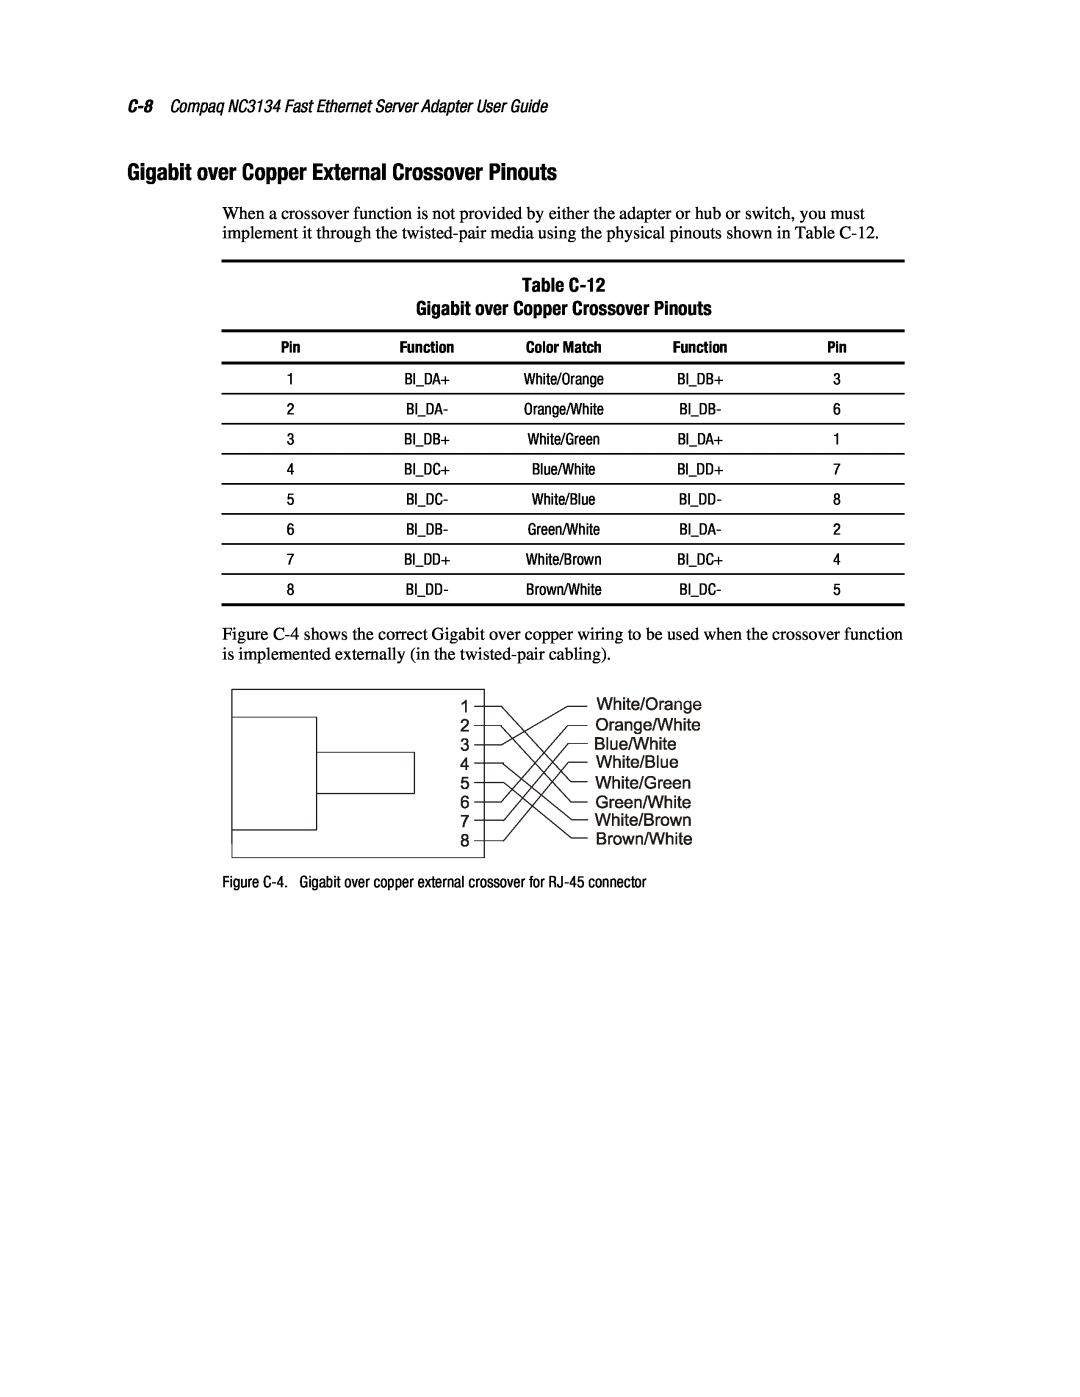 Compaq 3134 manual Gigabit over Copper External Crossover Pinouts, Table C-12 Gigabit over Copper Crossover Pinouts 